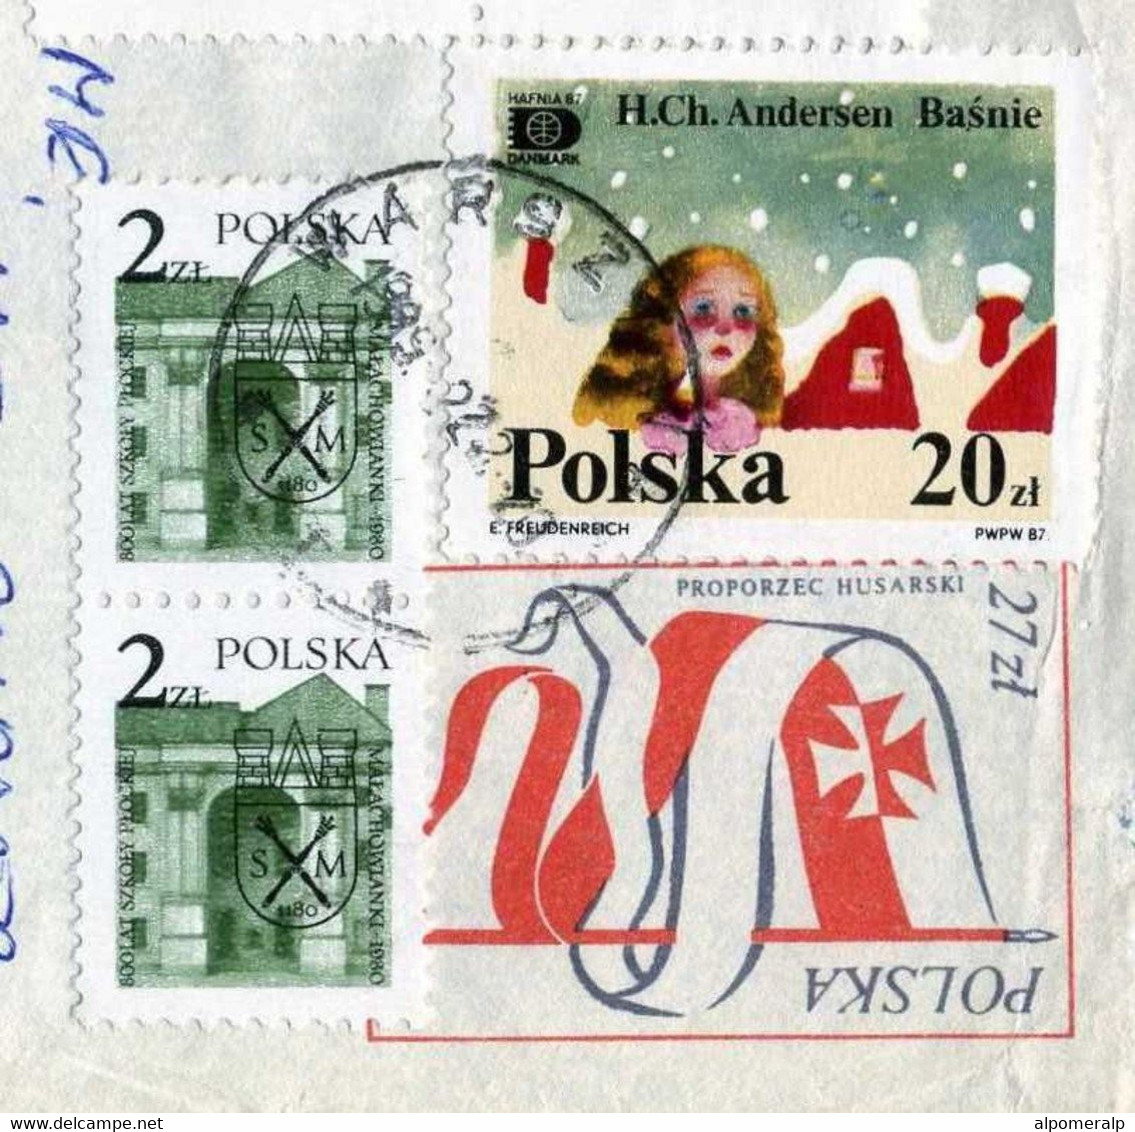 Poland Warszawa 1989, The Match Girl & Coat Of Arms Stamps Aerogram Cover Used To Florida USA | Mi 3163, 3128 - Aviones